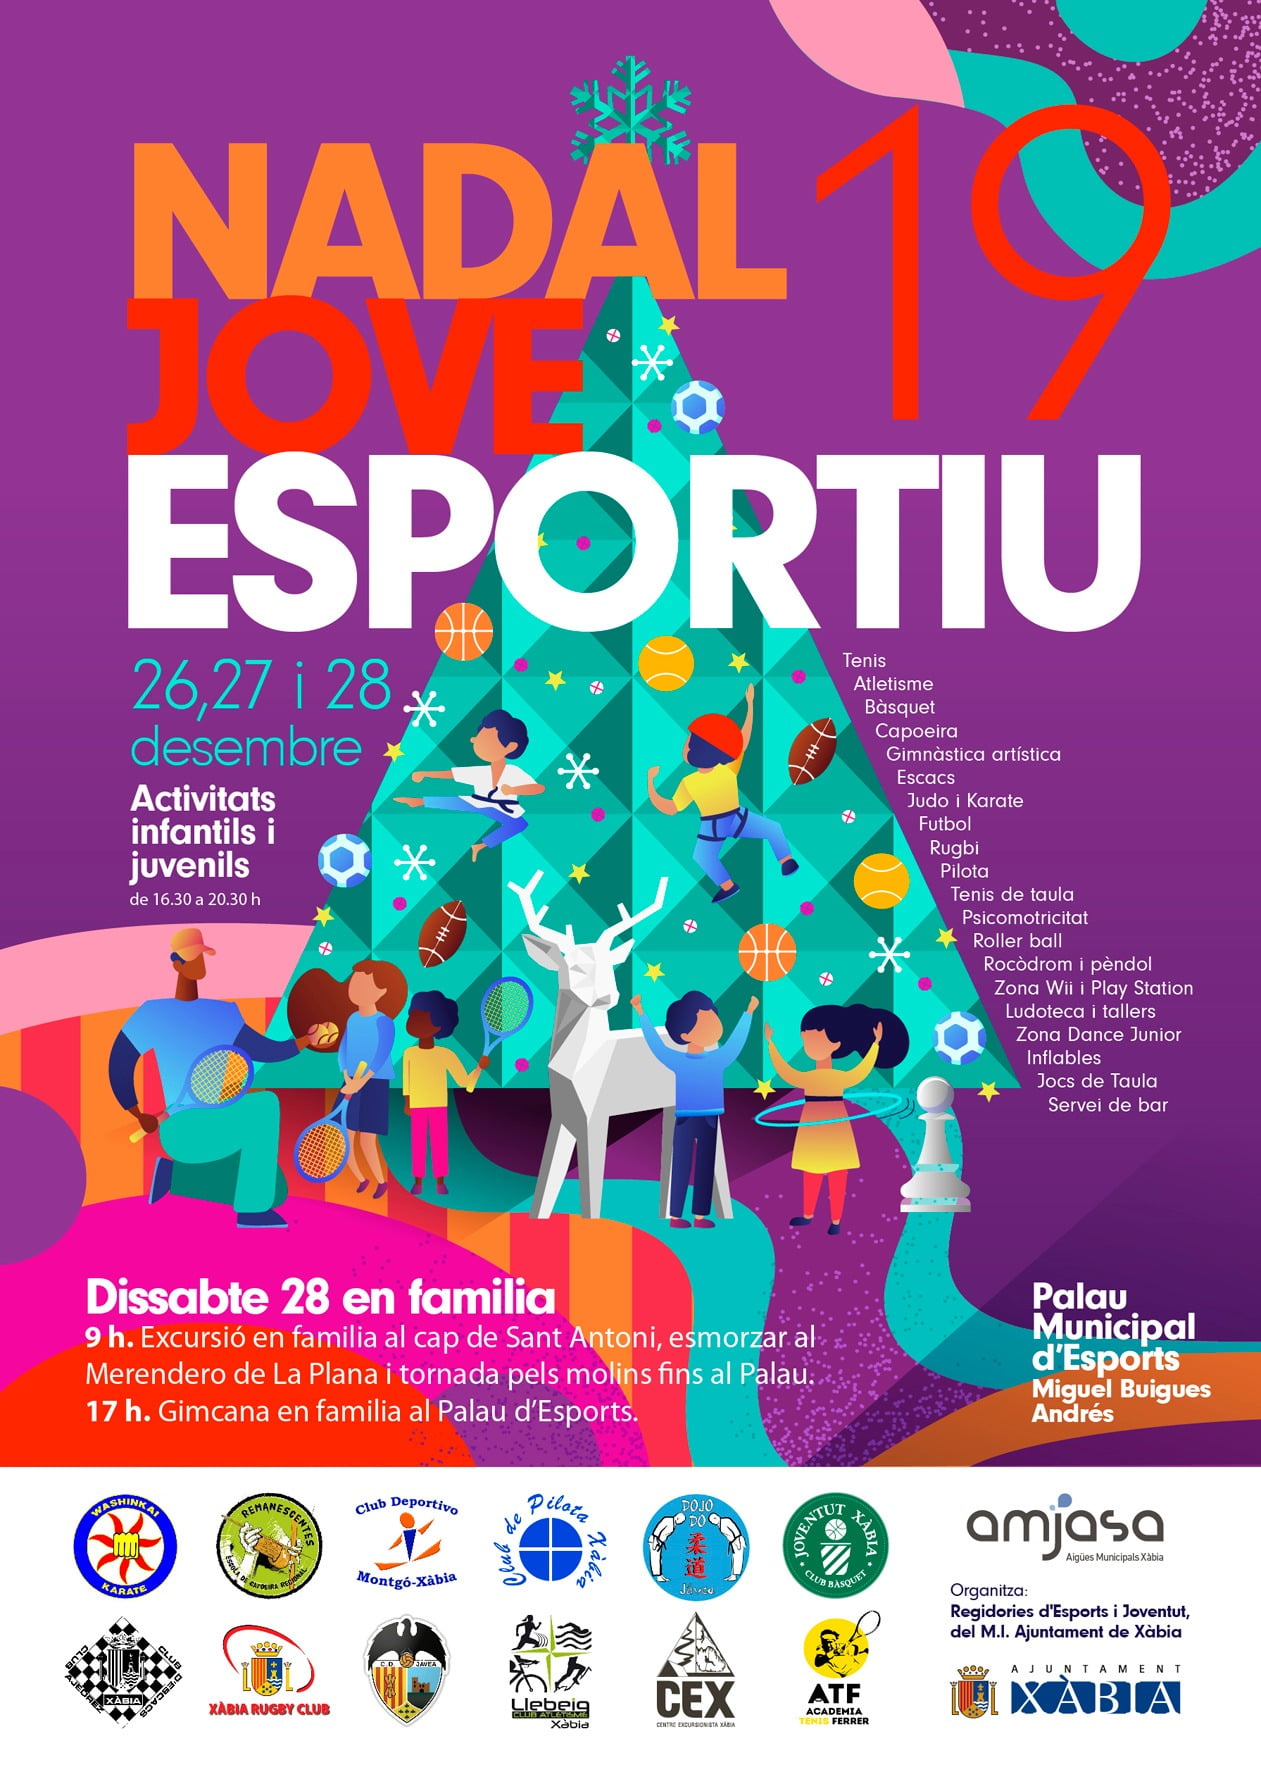 Nadal Jove-Esportiu 2019 Xàbia